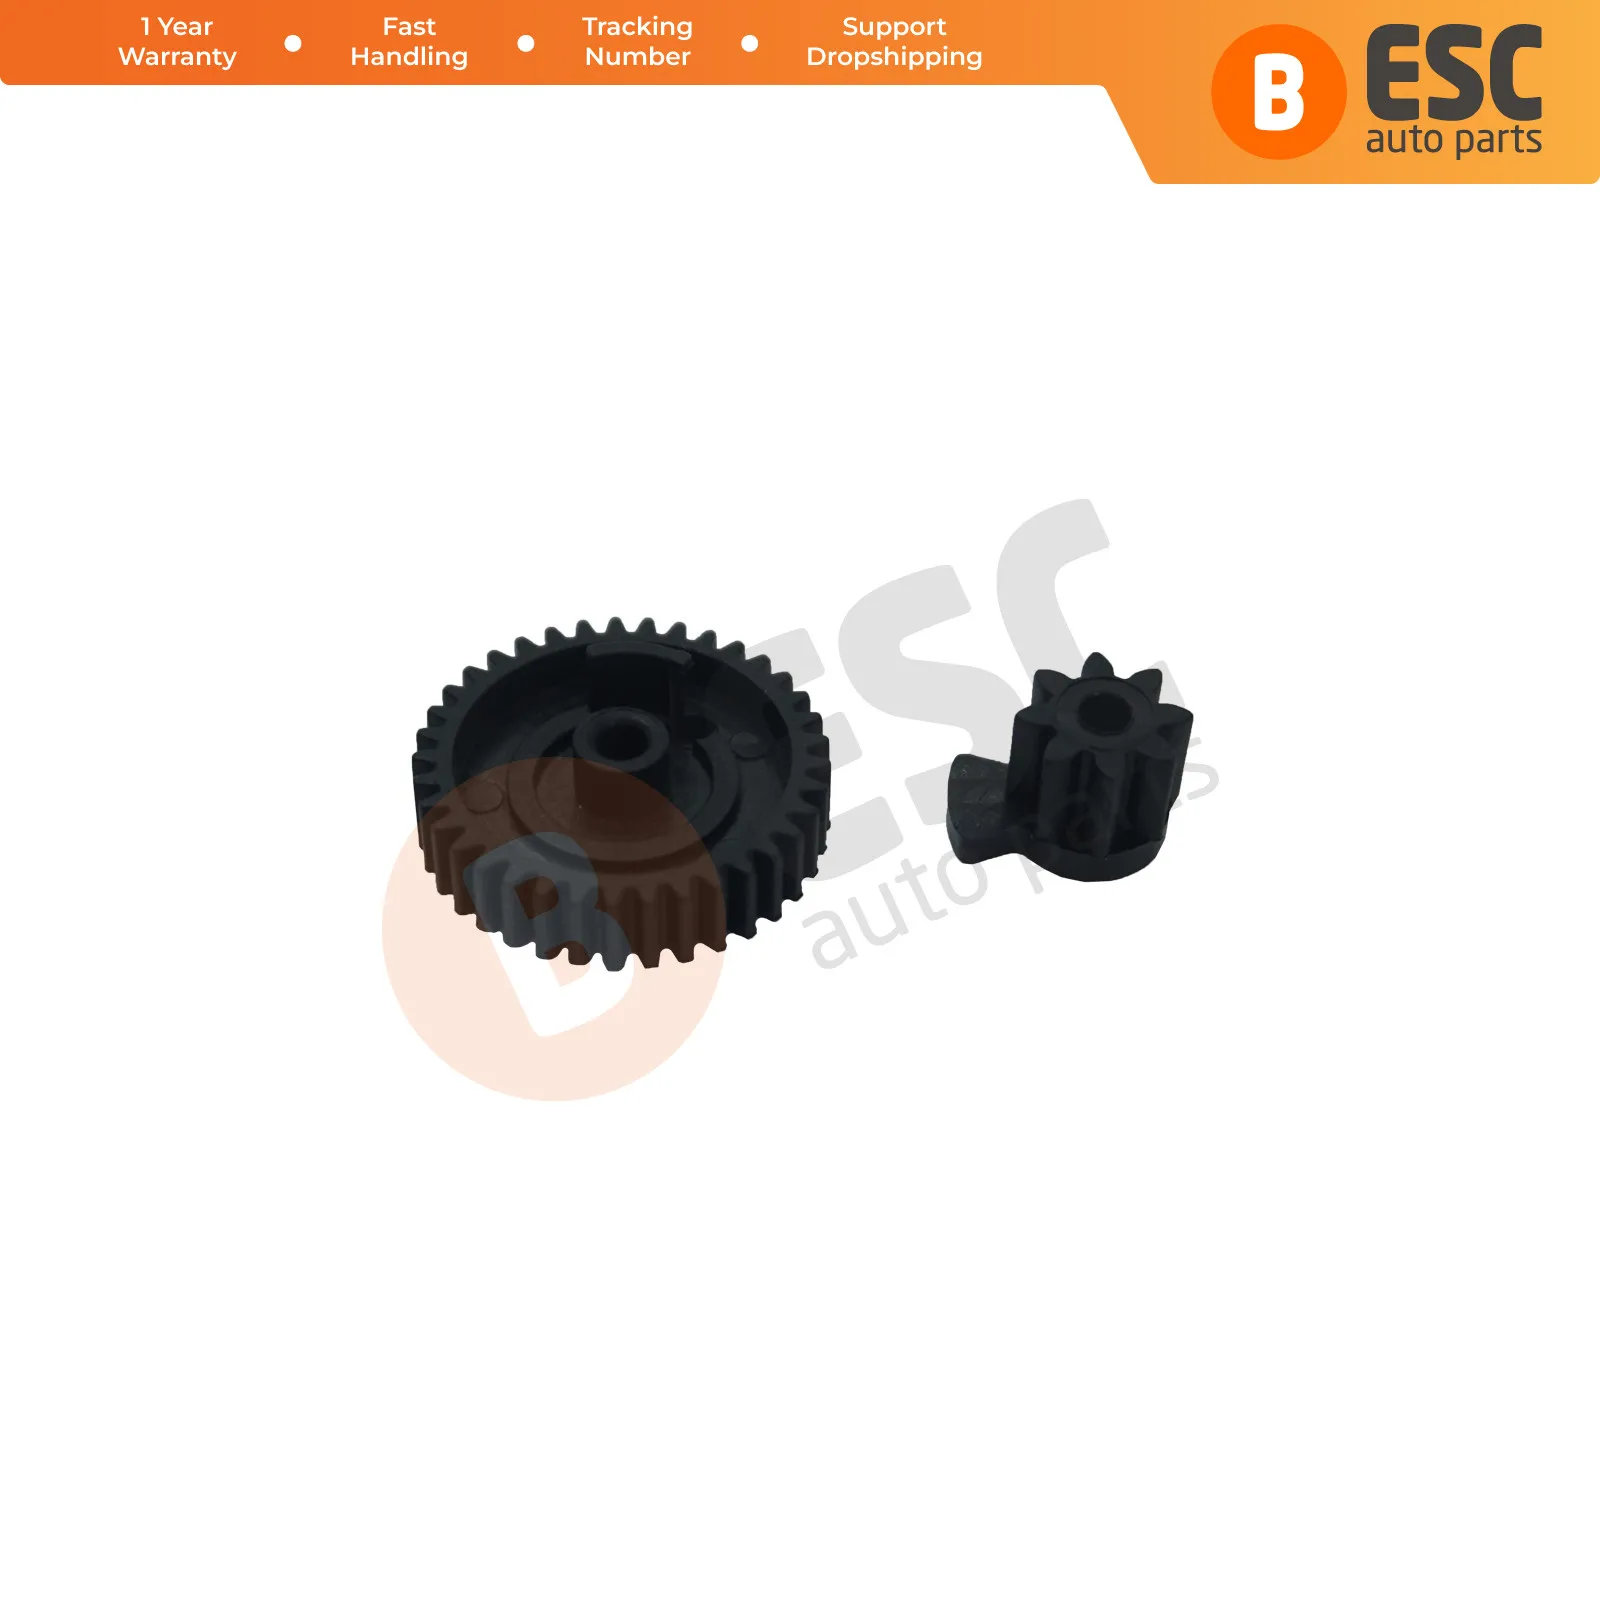 

ESC Auto Parts EGE586 Door Lock Repair Gear for Fiat Linea Punto Albea Palio 51910170-1 Fast Shipment Ship From Turkey